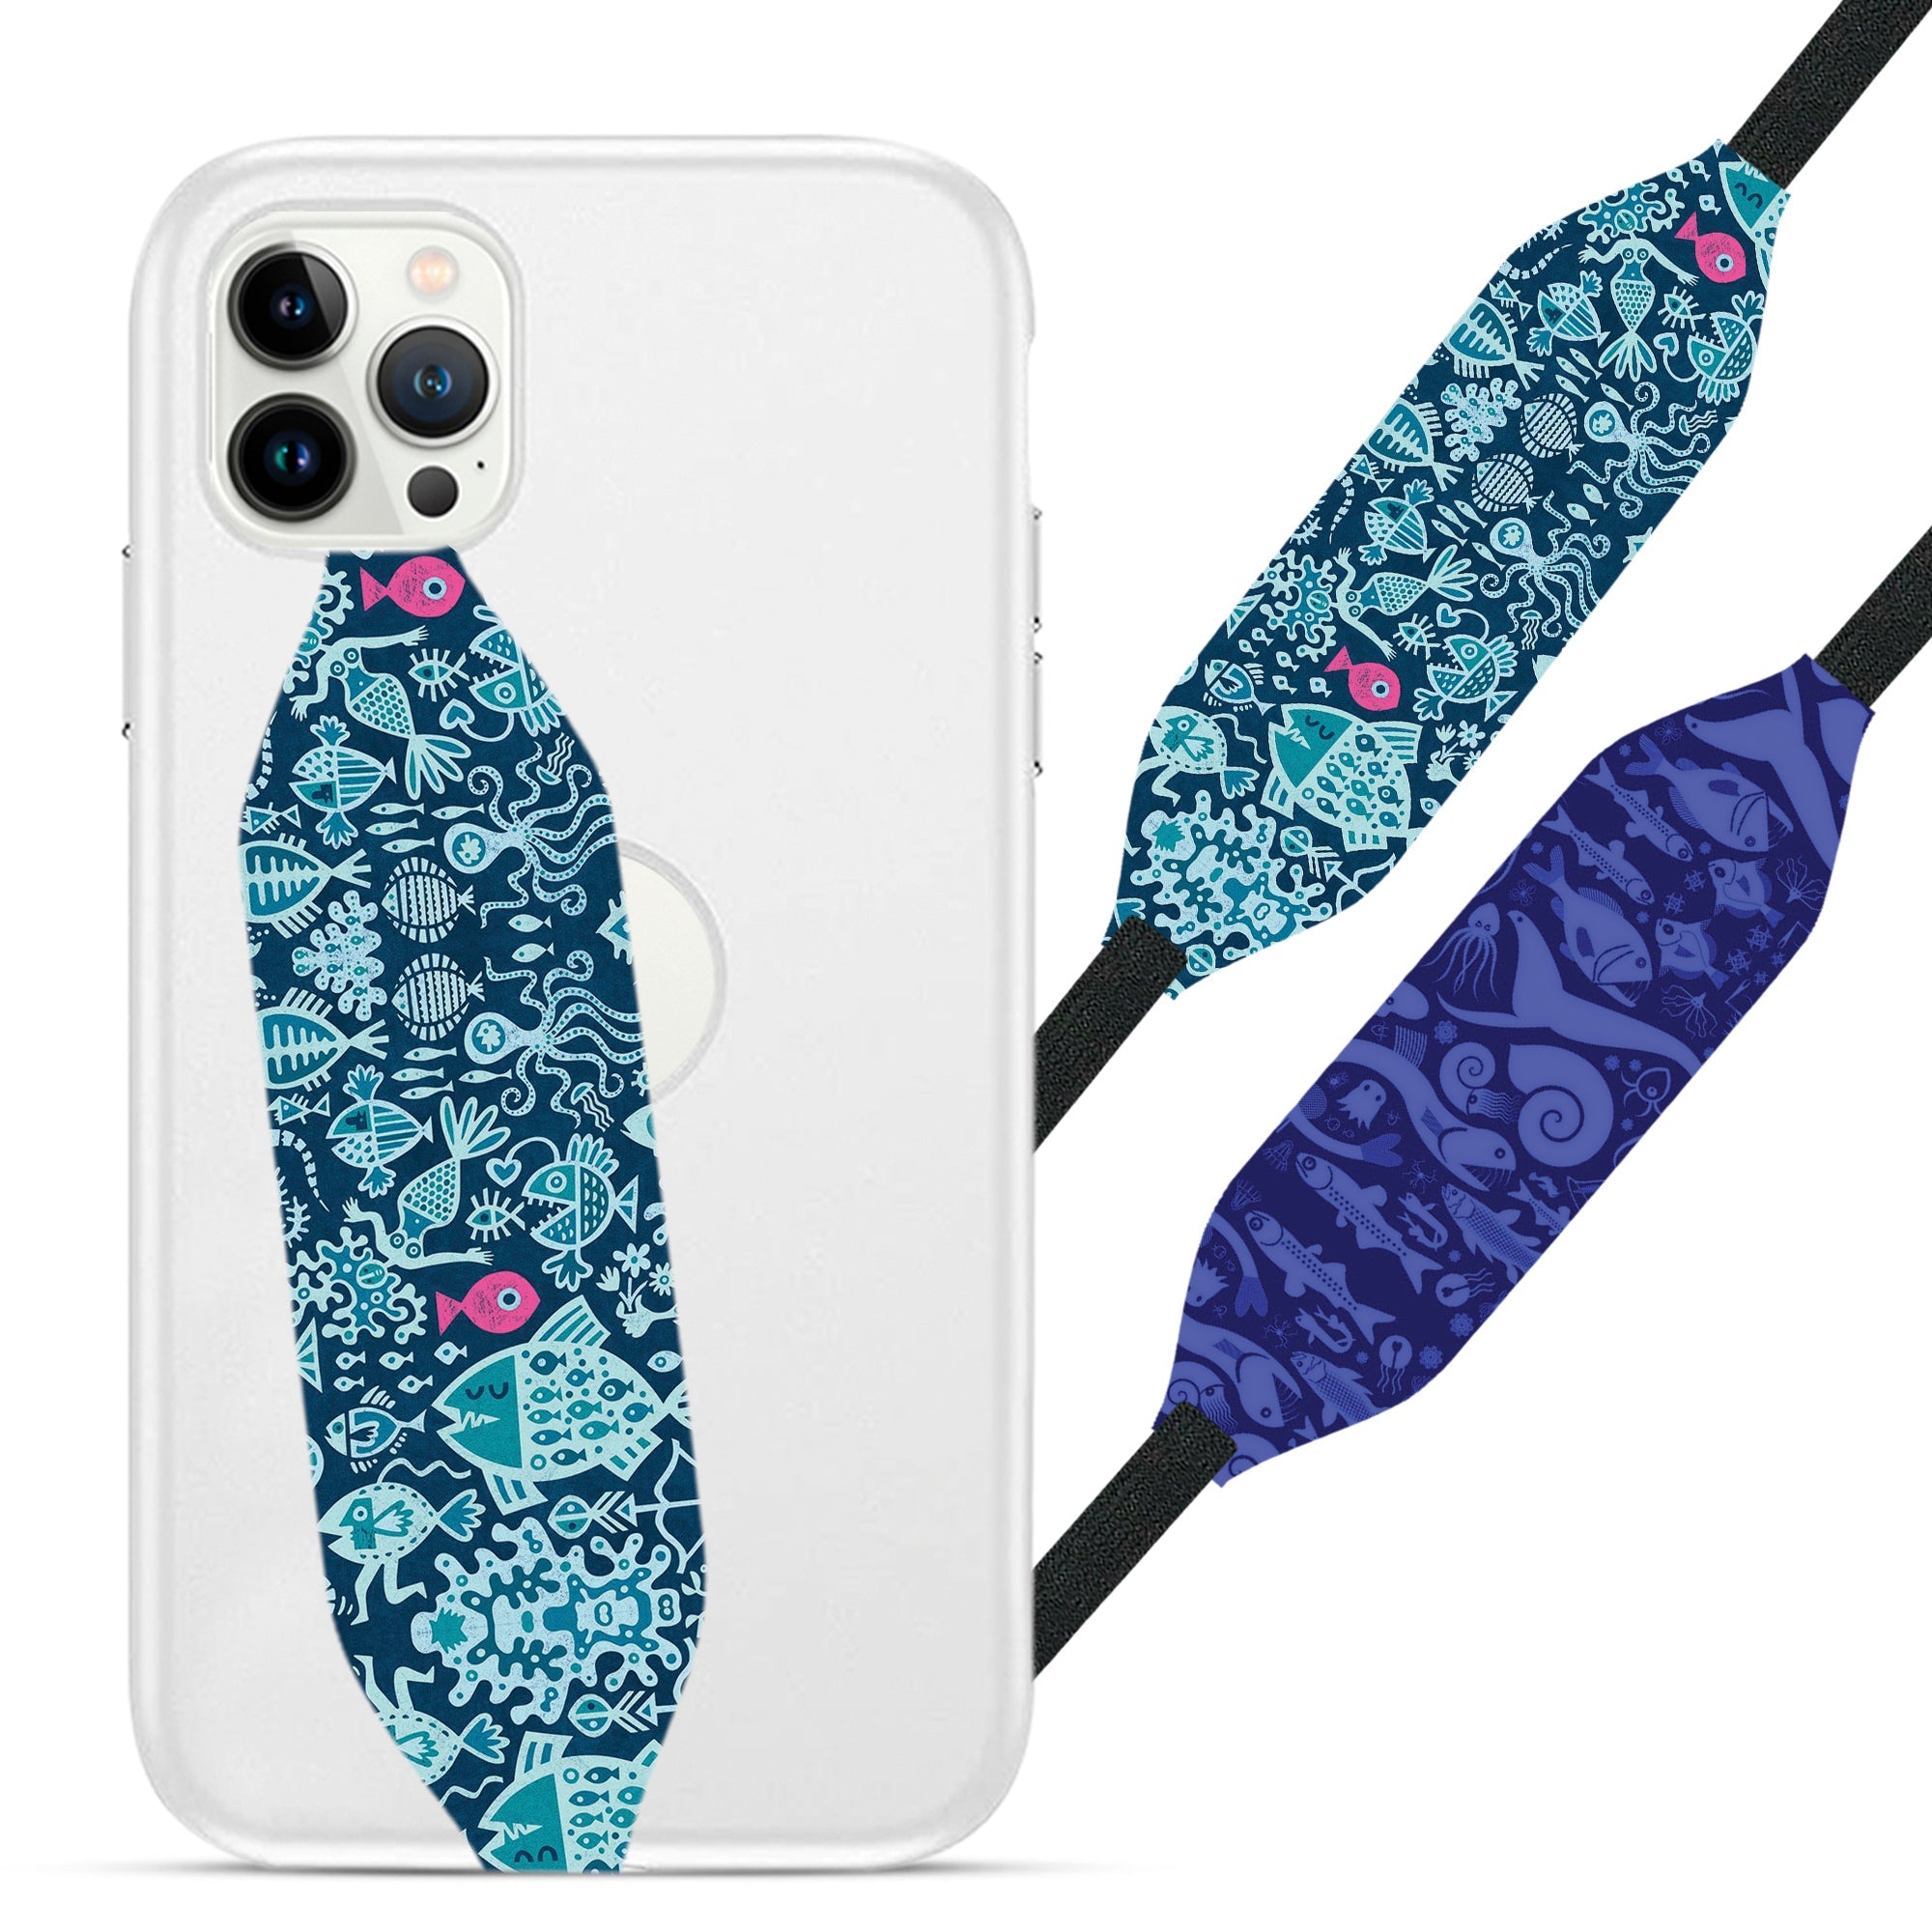 Universal Phone Grip Strap - Fish Pattern